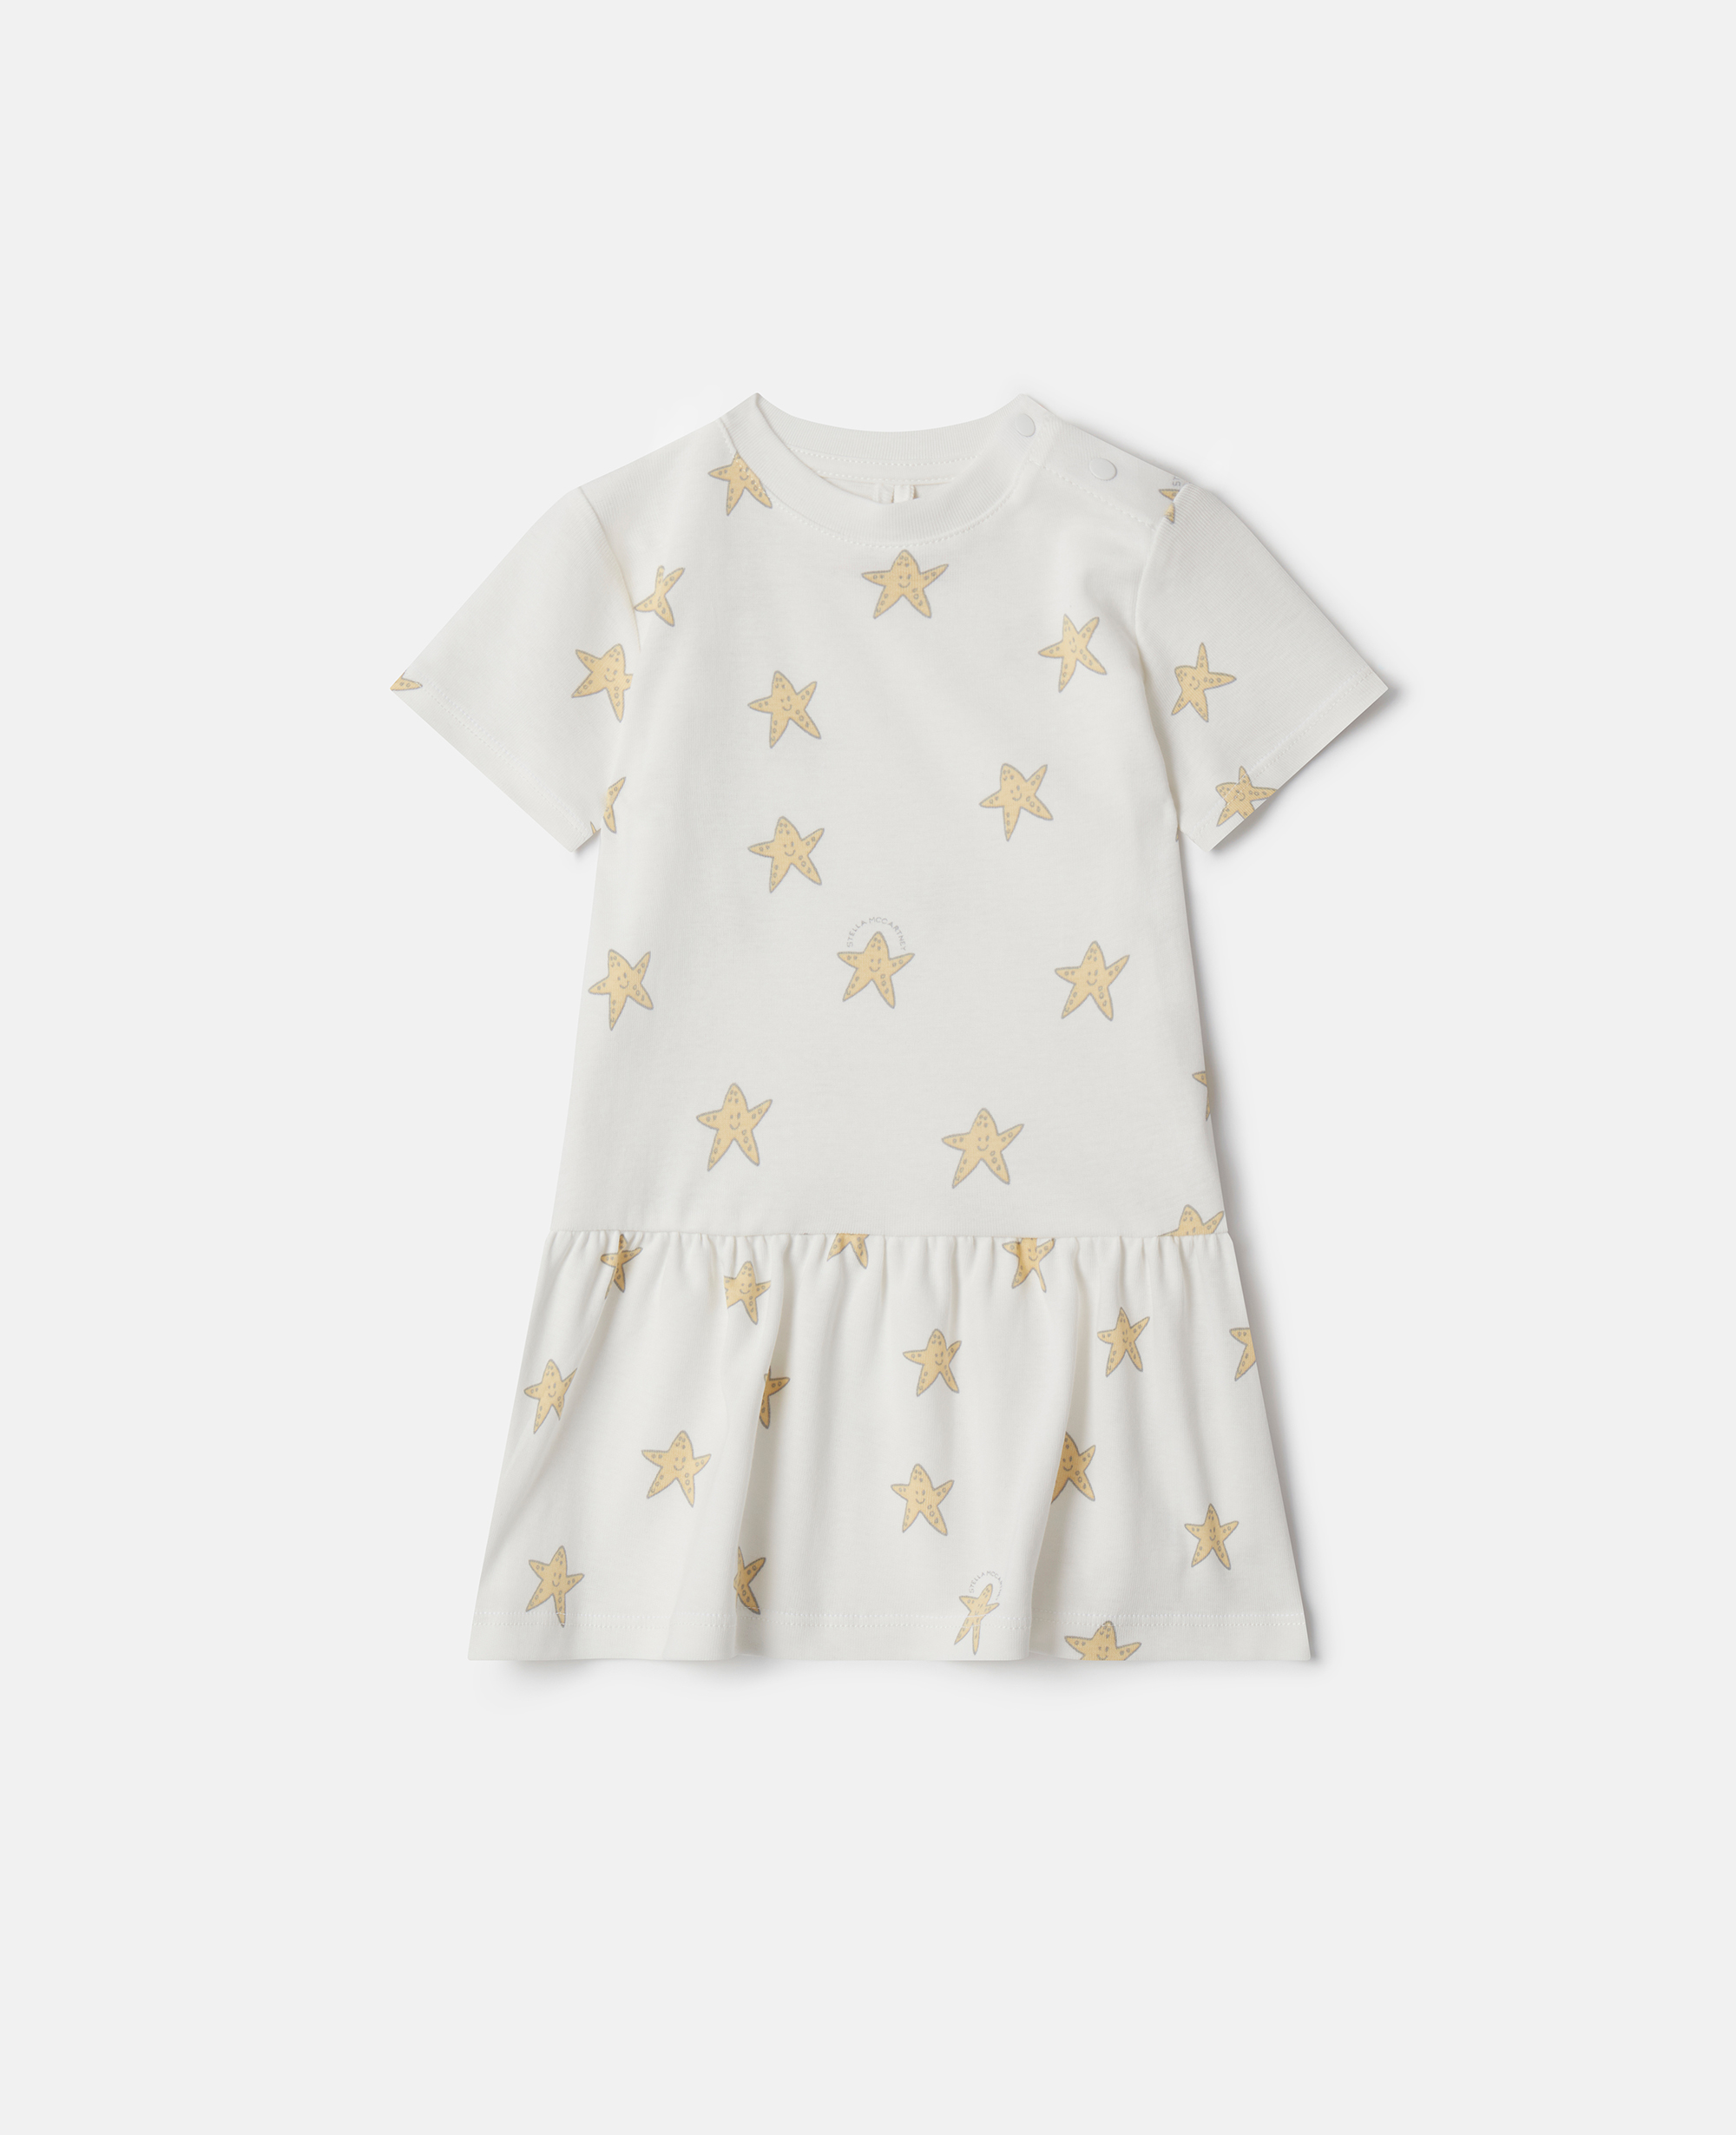 stella mccartney - robe à volants et imprimé smiling stella star, femme, ivoire/jaune, taille: 9m